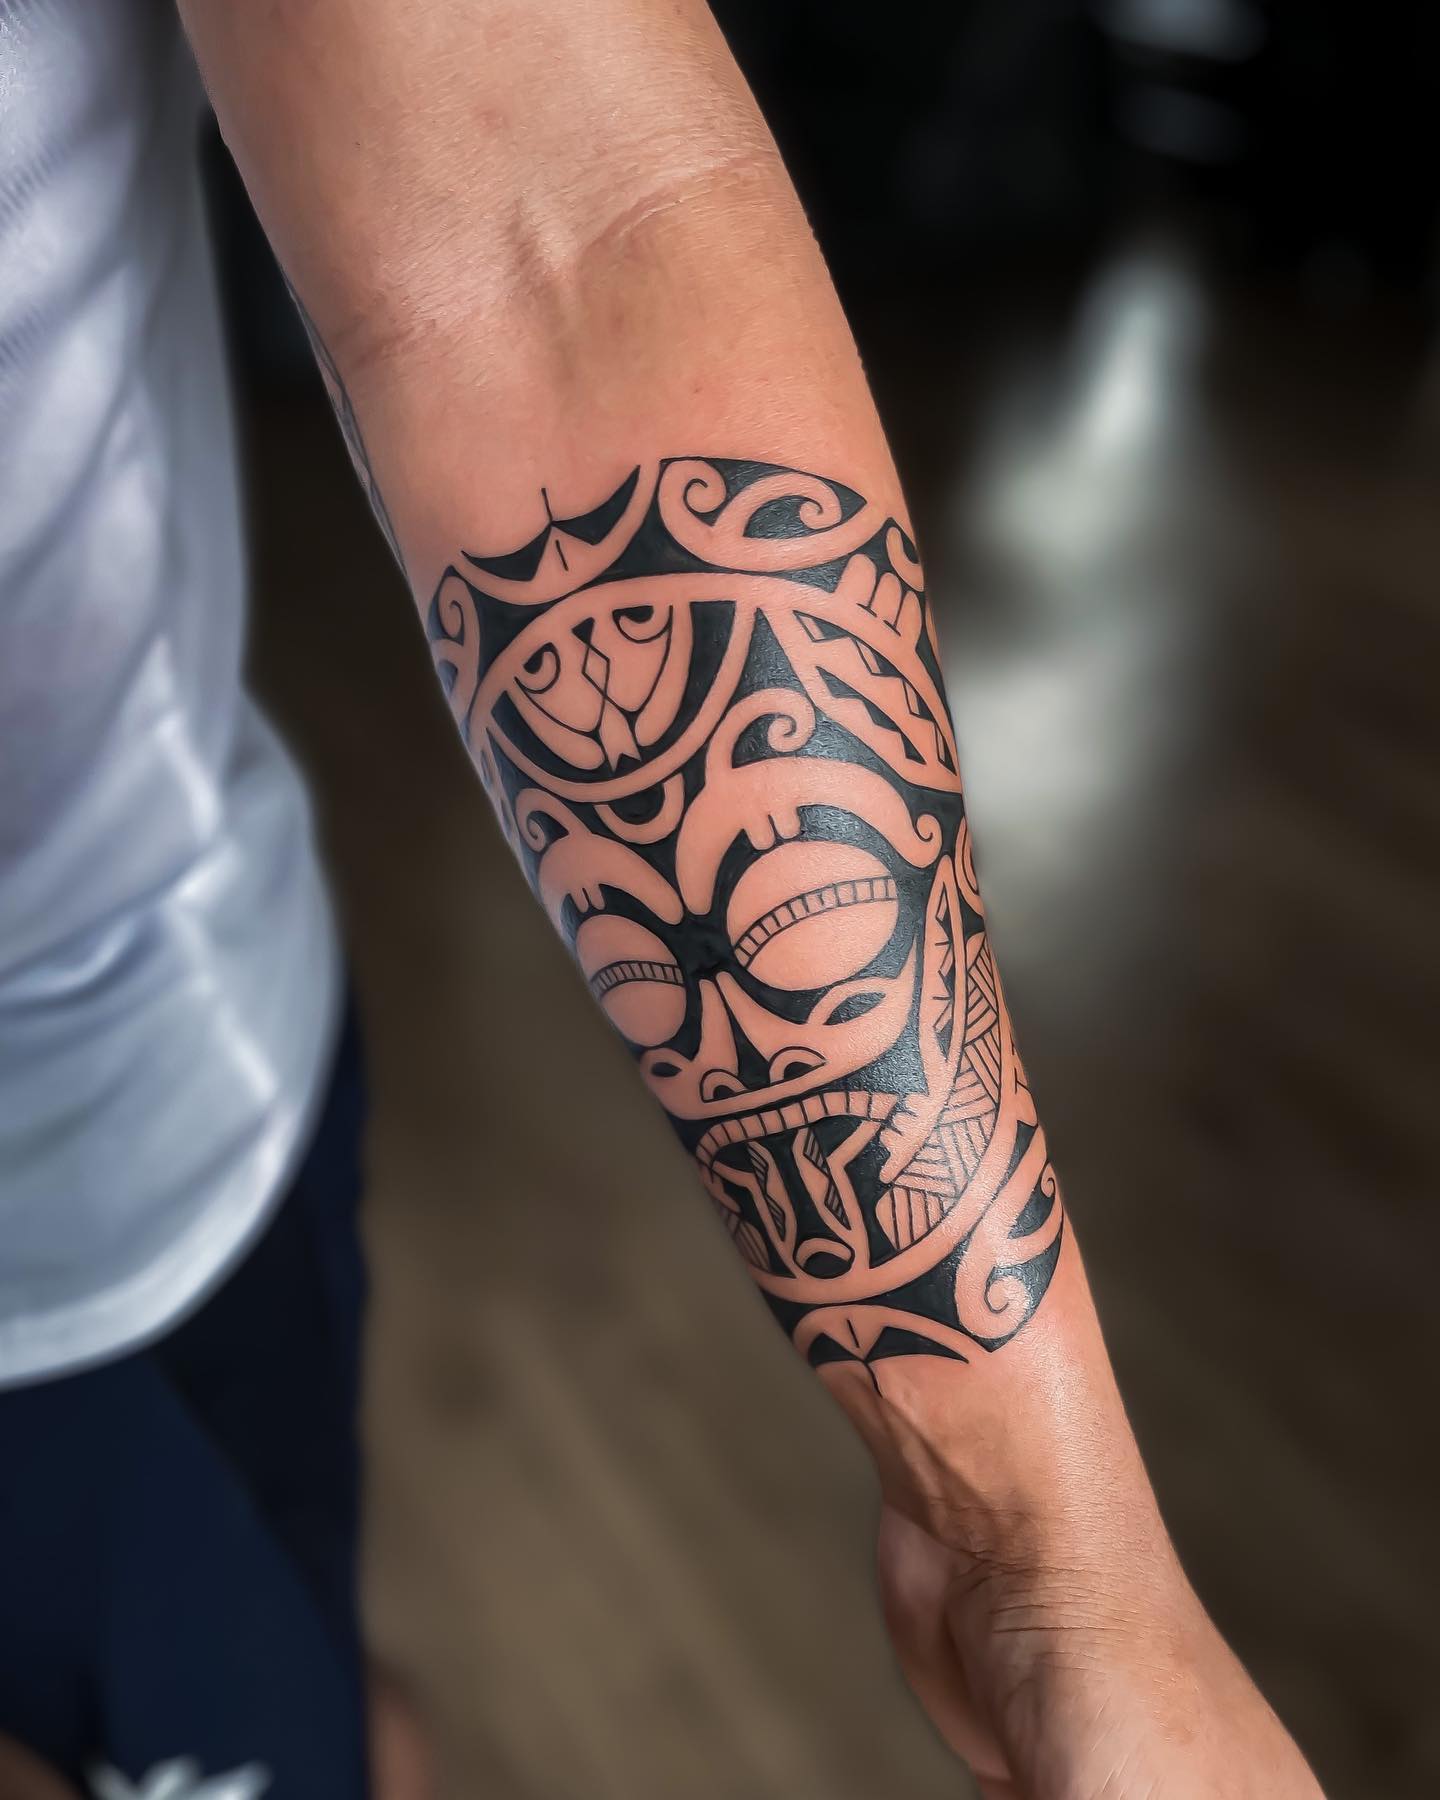 Tatuaje de maorí para hombres